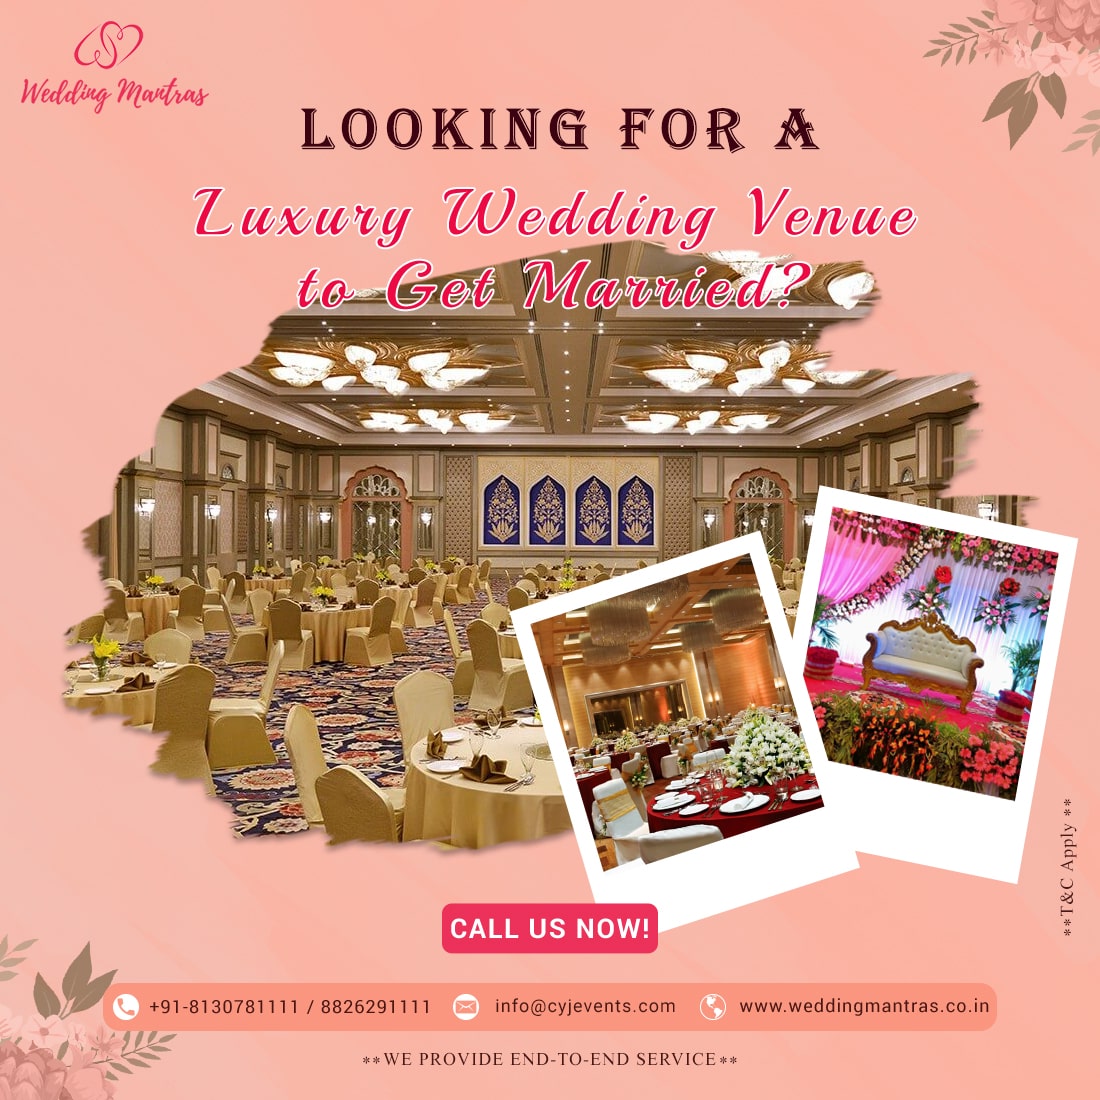  Destination Wedding in Ranthambore – Get Top Wedding Venues in Ranthambore